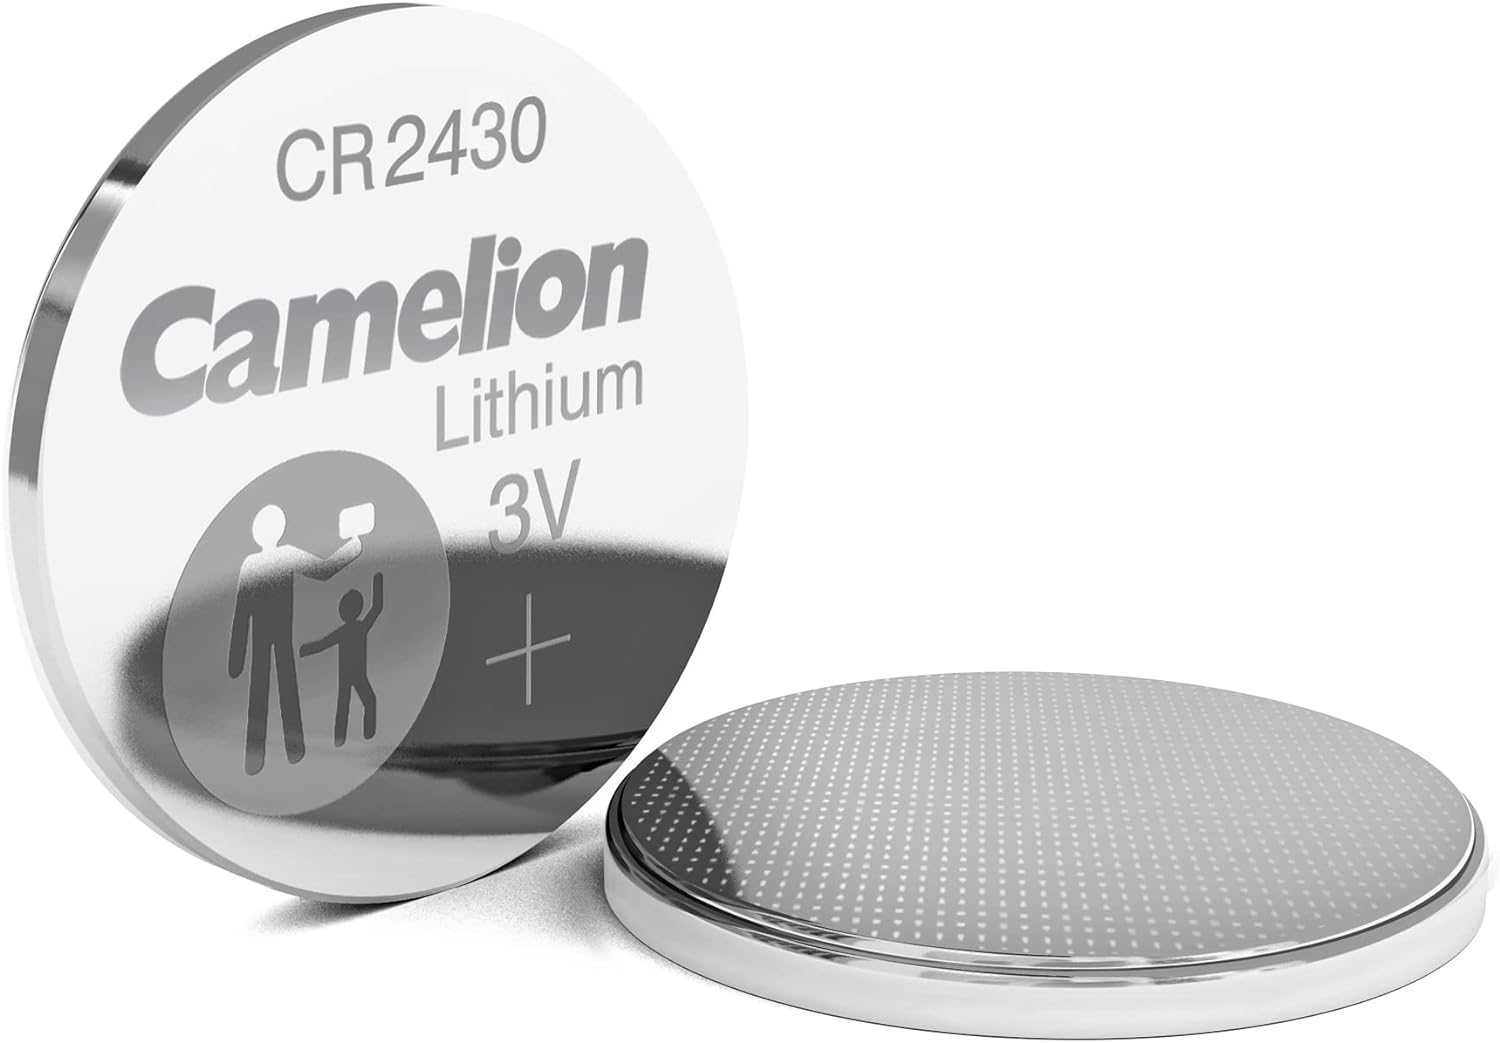 Camelion 3V CR2430 Lithium Button Cell